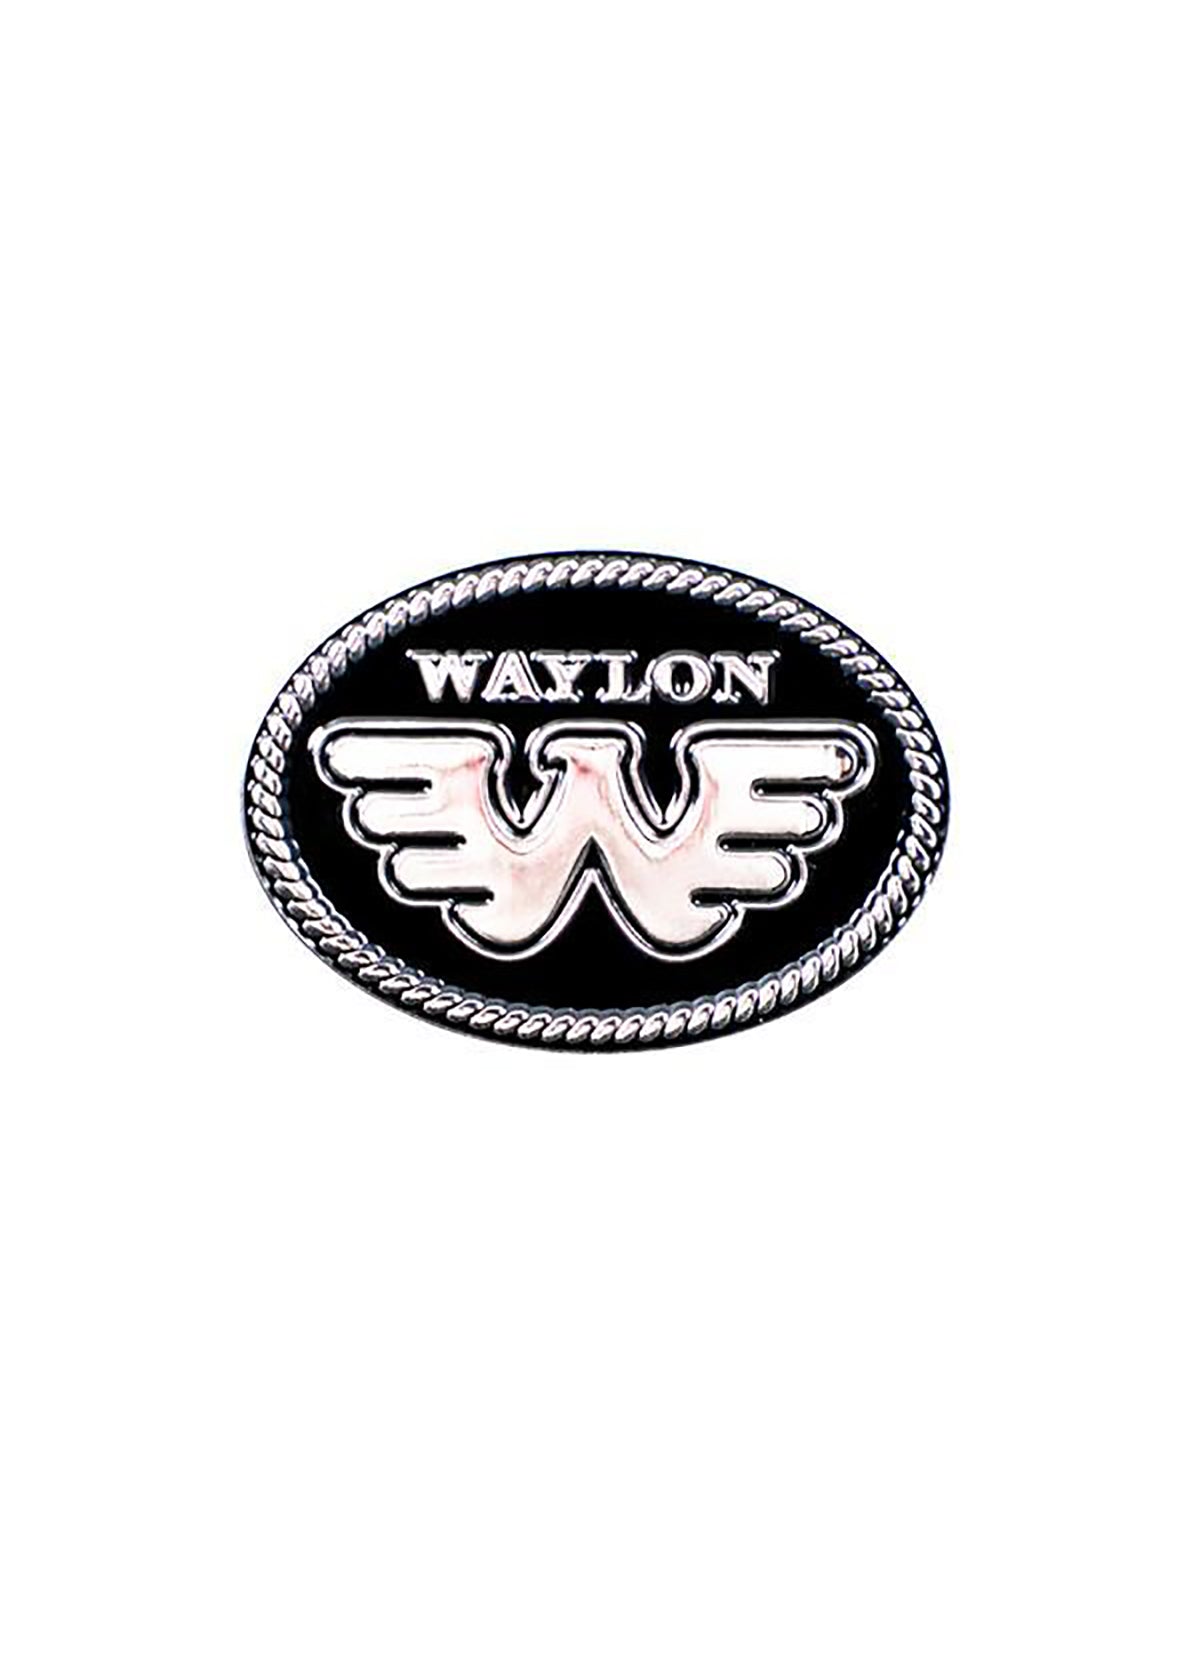 Flying W Waylon Jennings Pin - Black